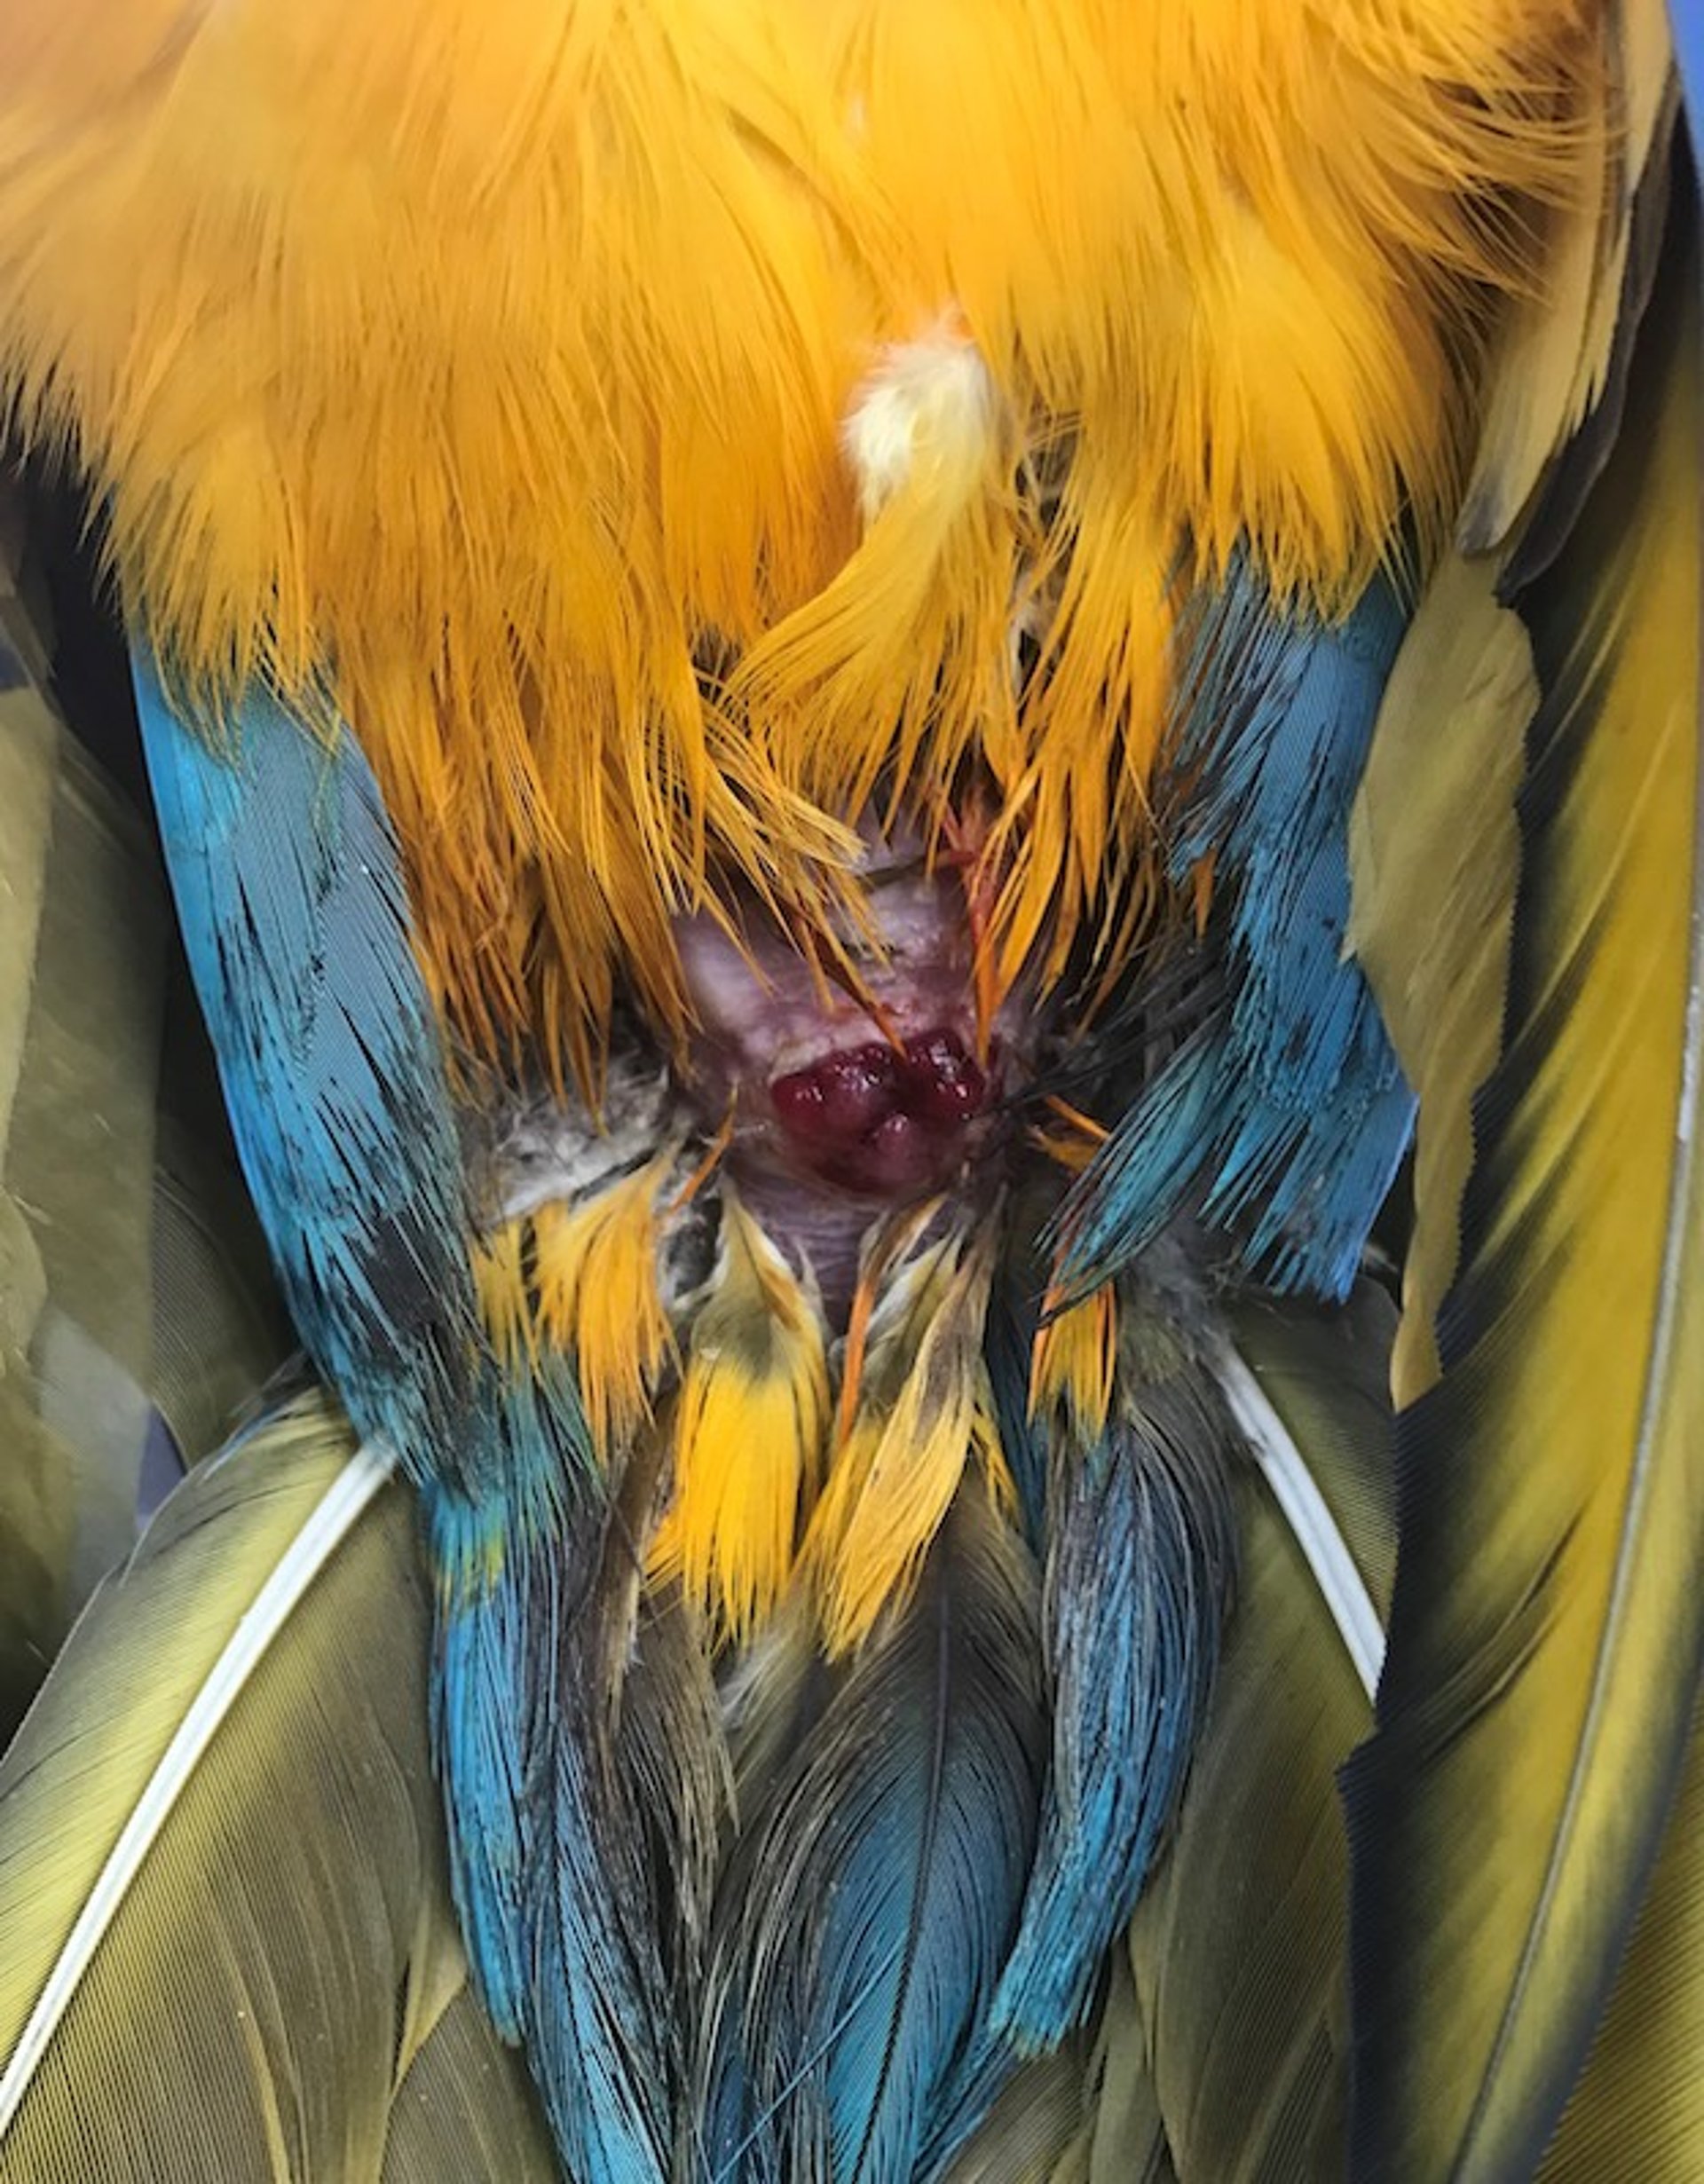 Cloacal carcinoma, macaw